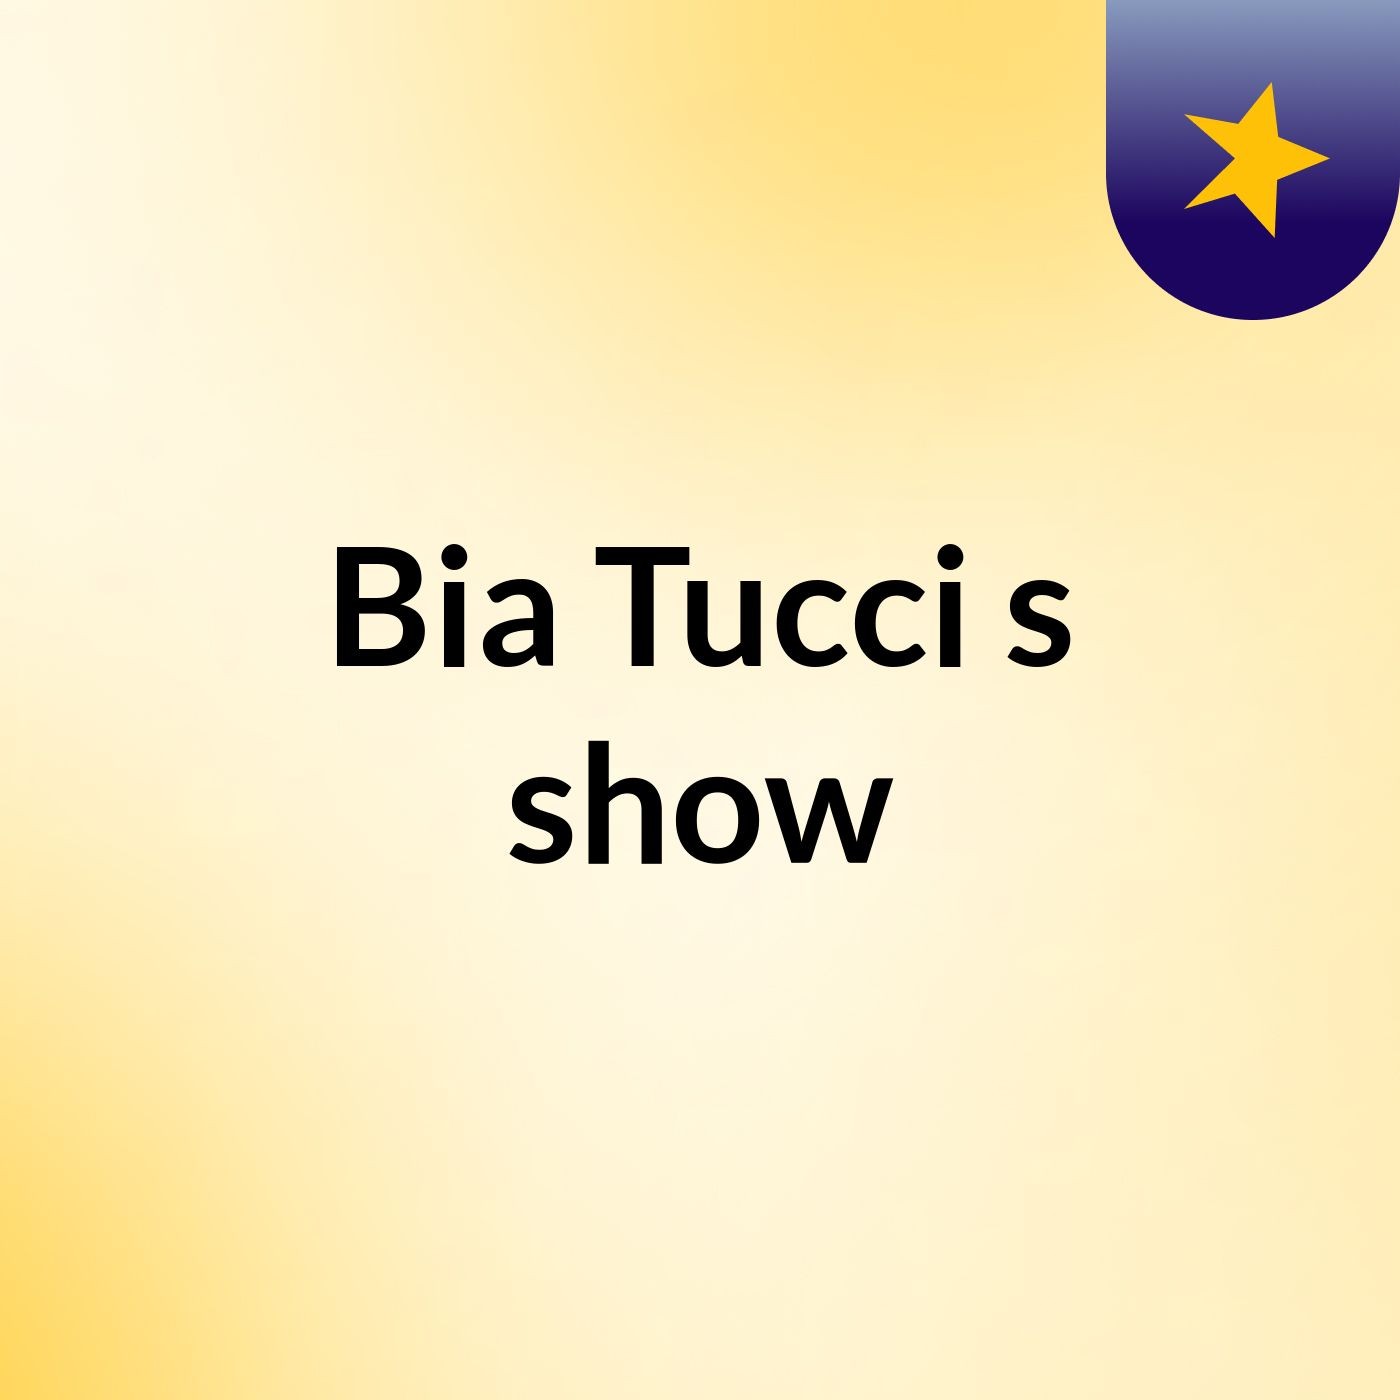 Bia Tucci's show